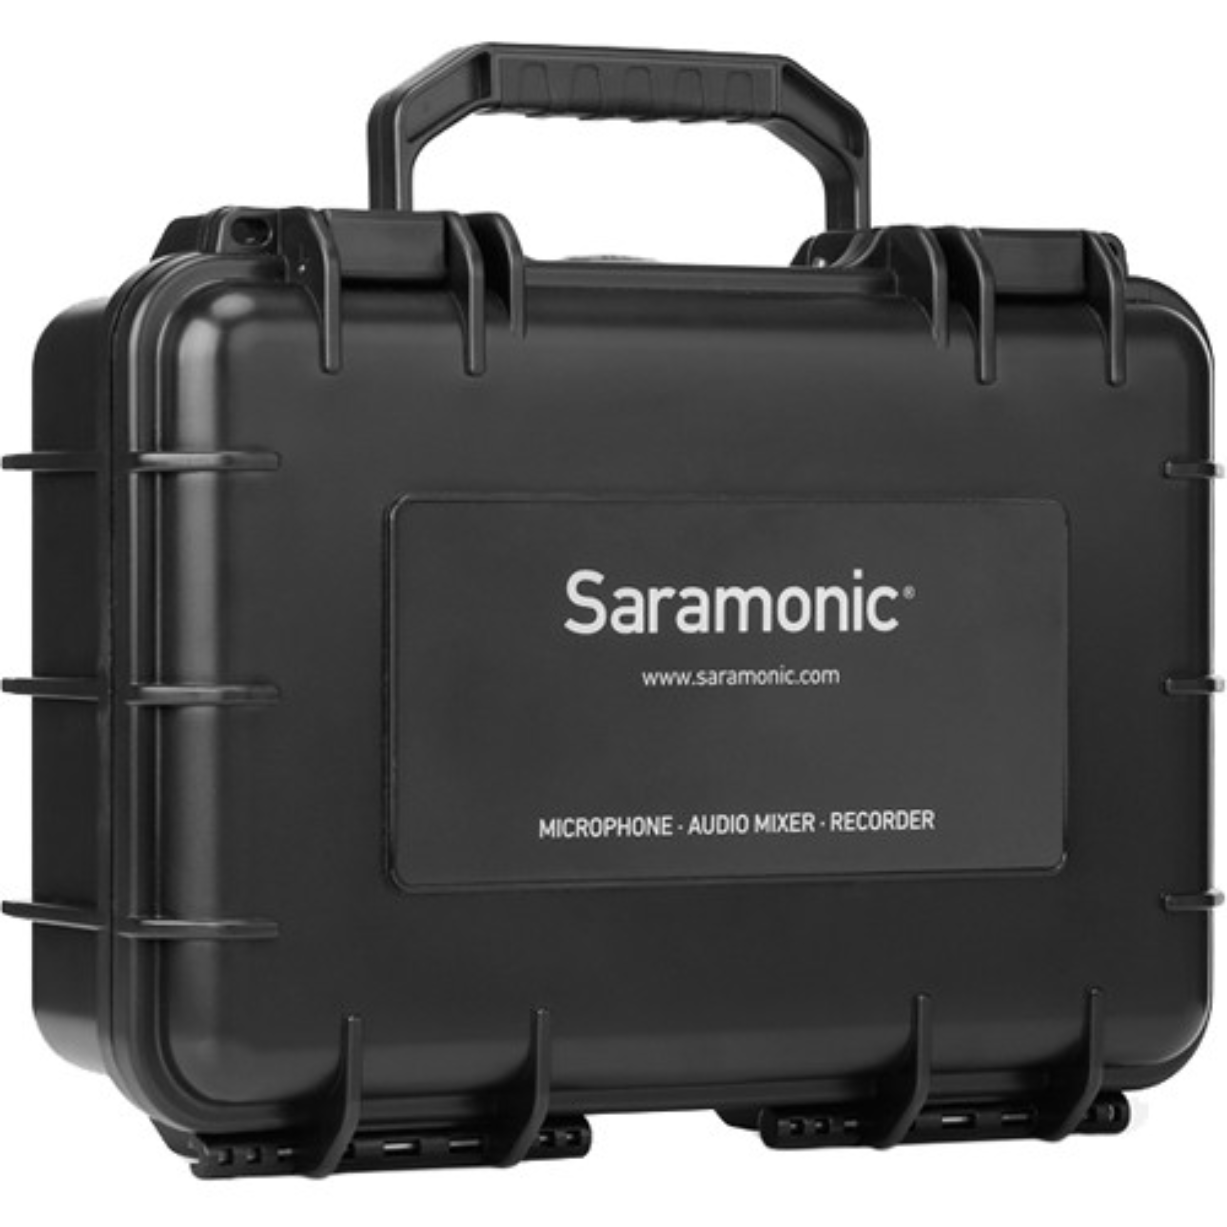 Saramonic Plastic Carrying Case (IP 67 Rating) with Foam Insert